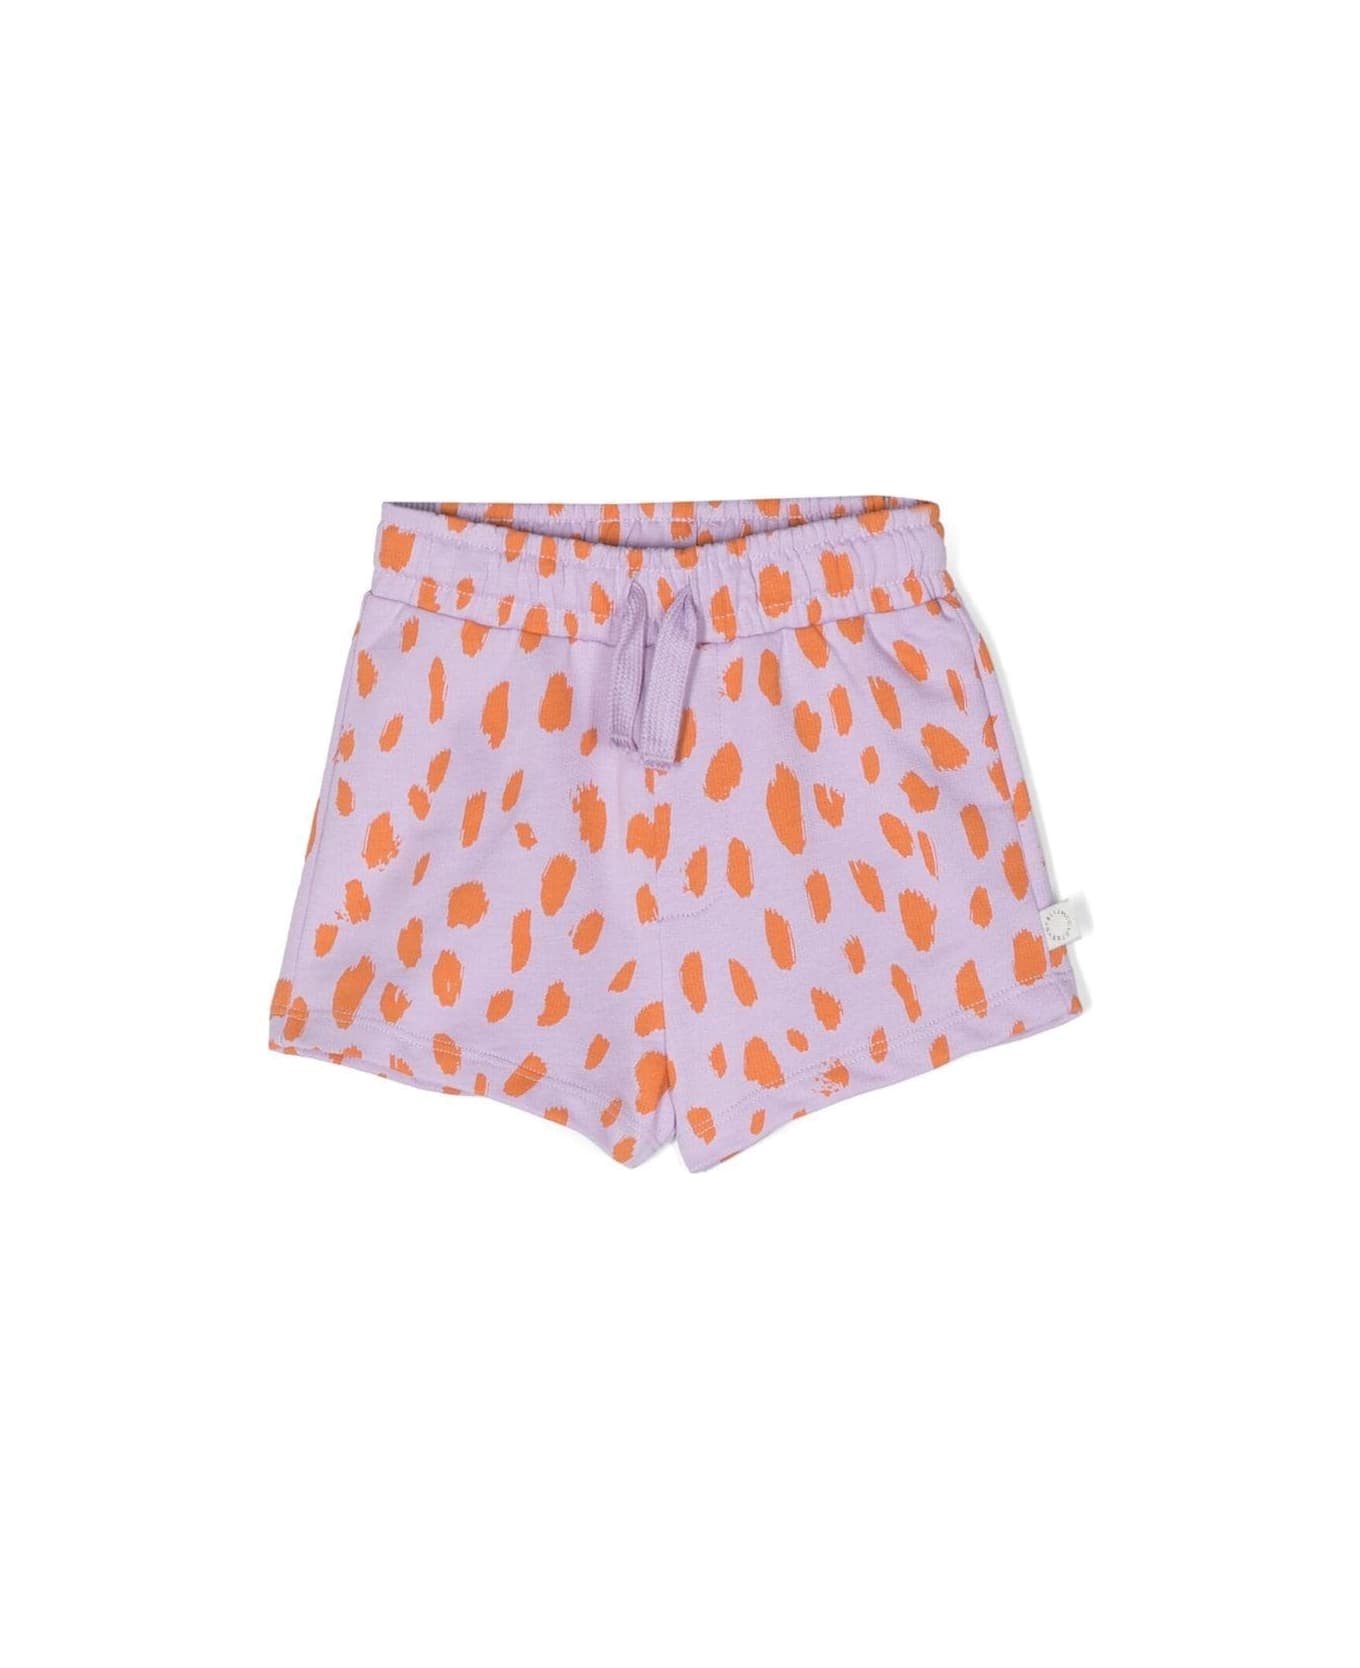 Stella McCartney Violet And Orange Cotton Stretch Shorts - GLICINE/ARGENTO ボトムス